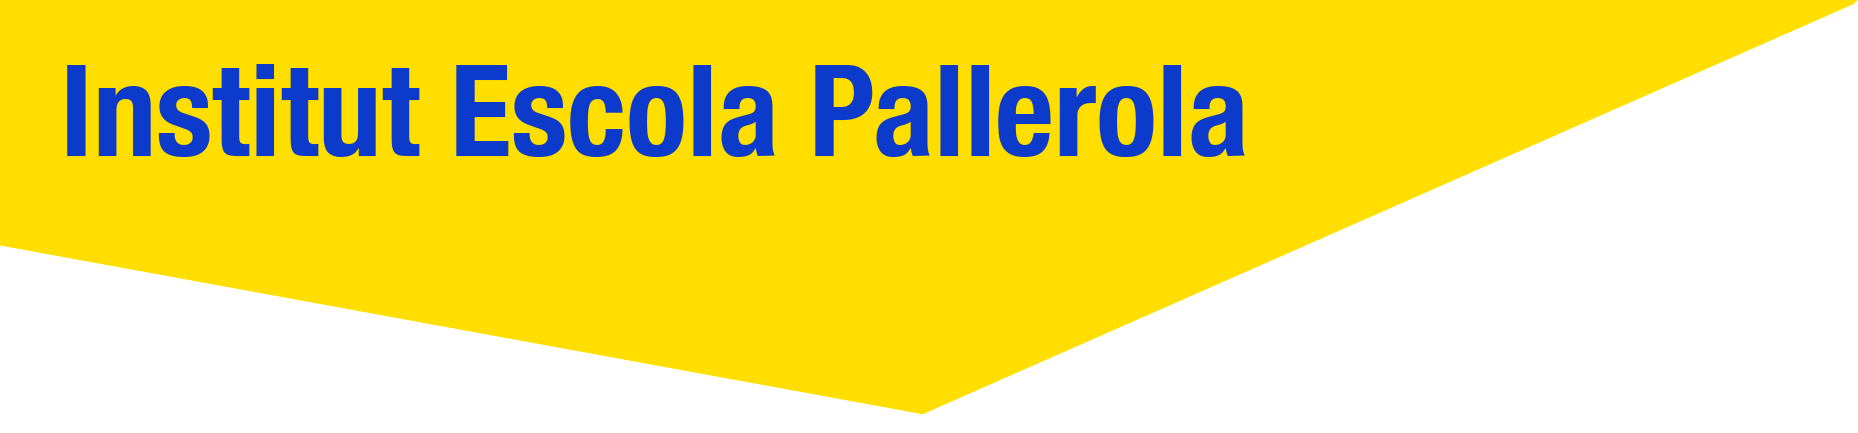 Pallerola